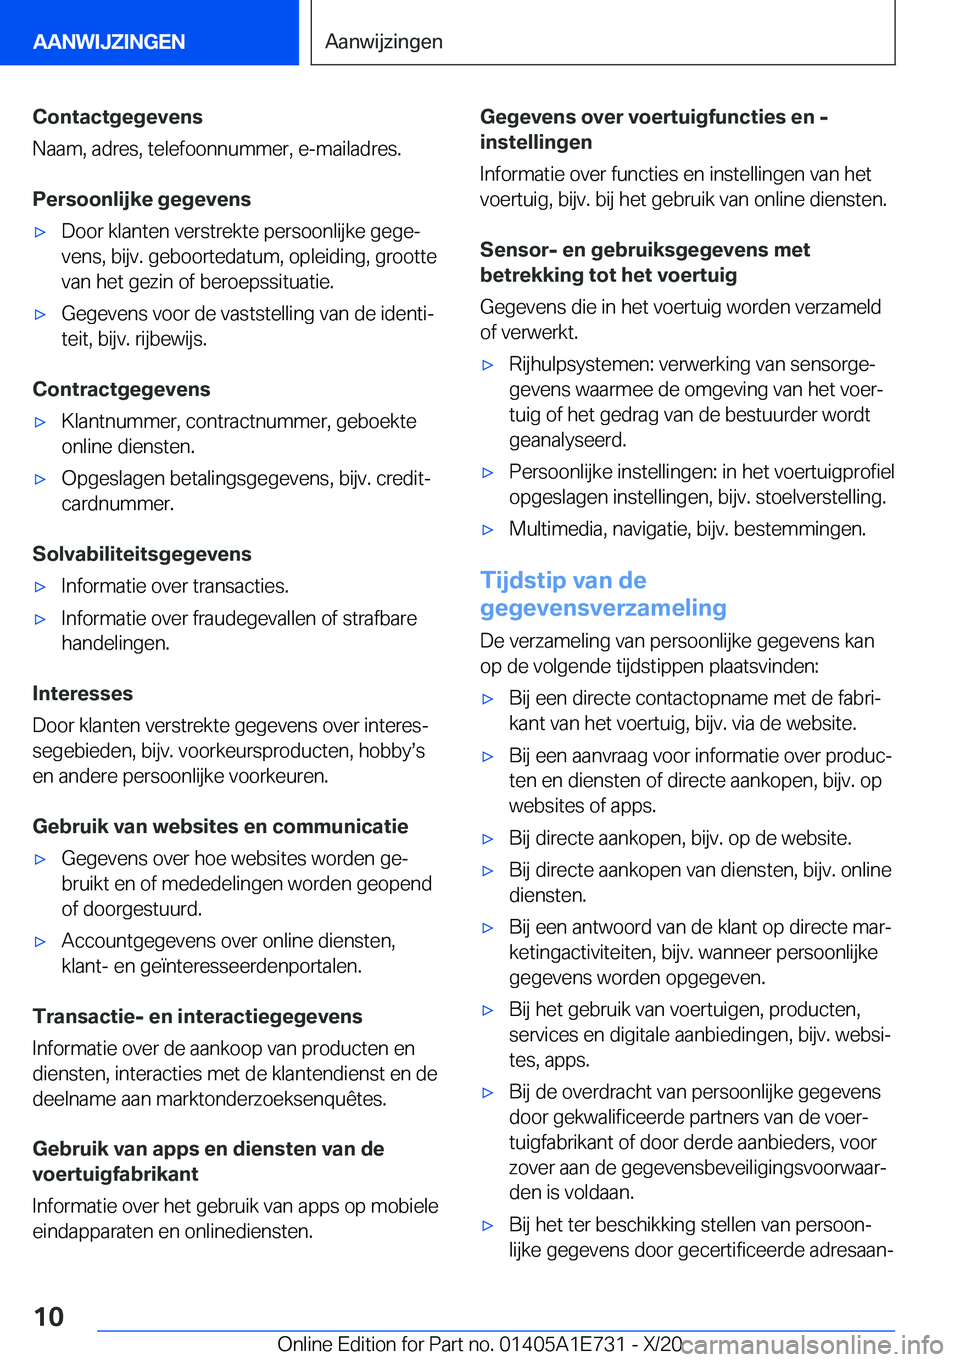 BMW X2 2021  Instructieboekjes (in Dutch) �C�o�n�t�a�c�t�g�e�g�e�v�e�n�s
�N�a�a�m�,��a�d�r�e�s�,��t�e�l�e�f�o�o�n�n�u�m�m�e�r�,��e�-�m�a�i�l�a�d�r�e�s�.
�P�e�r�s�o�o�n�l�i�j�k�e��g�e�g�e�v�e�n�s'x�D�o�o�r��k�l�a�n�t�e�n��v�e�r�s�t�r